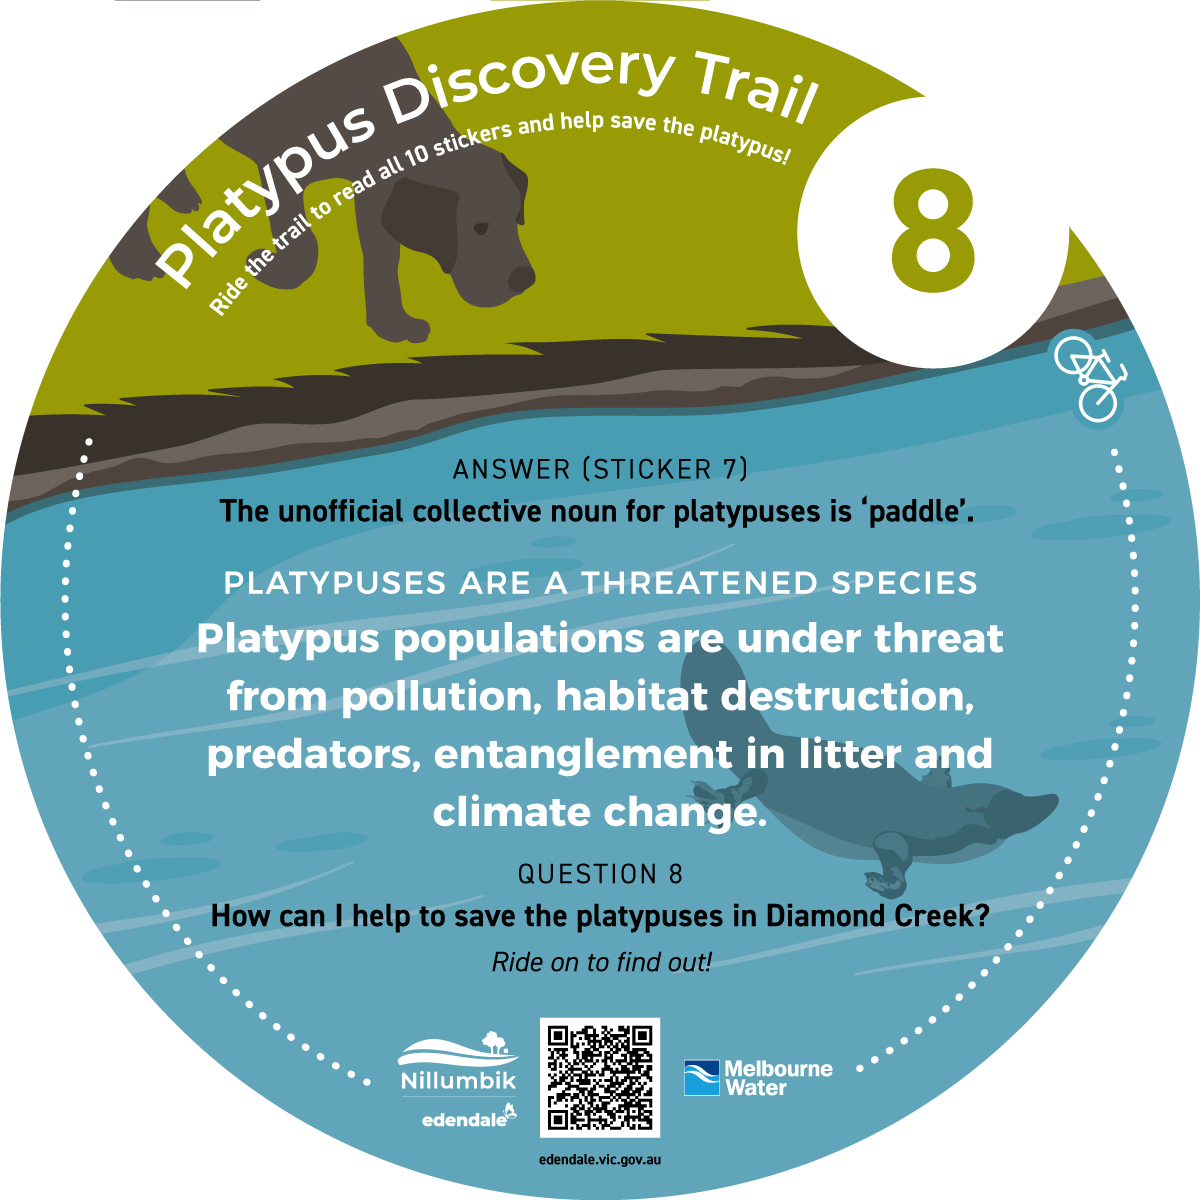 Diamond-Creek-Platypus-Discovery-Trail-8.jpg